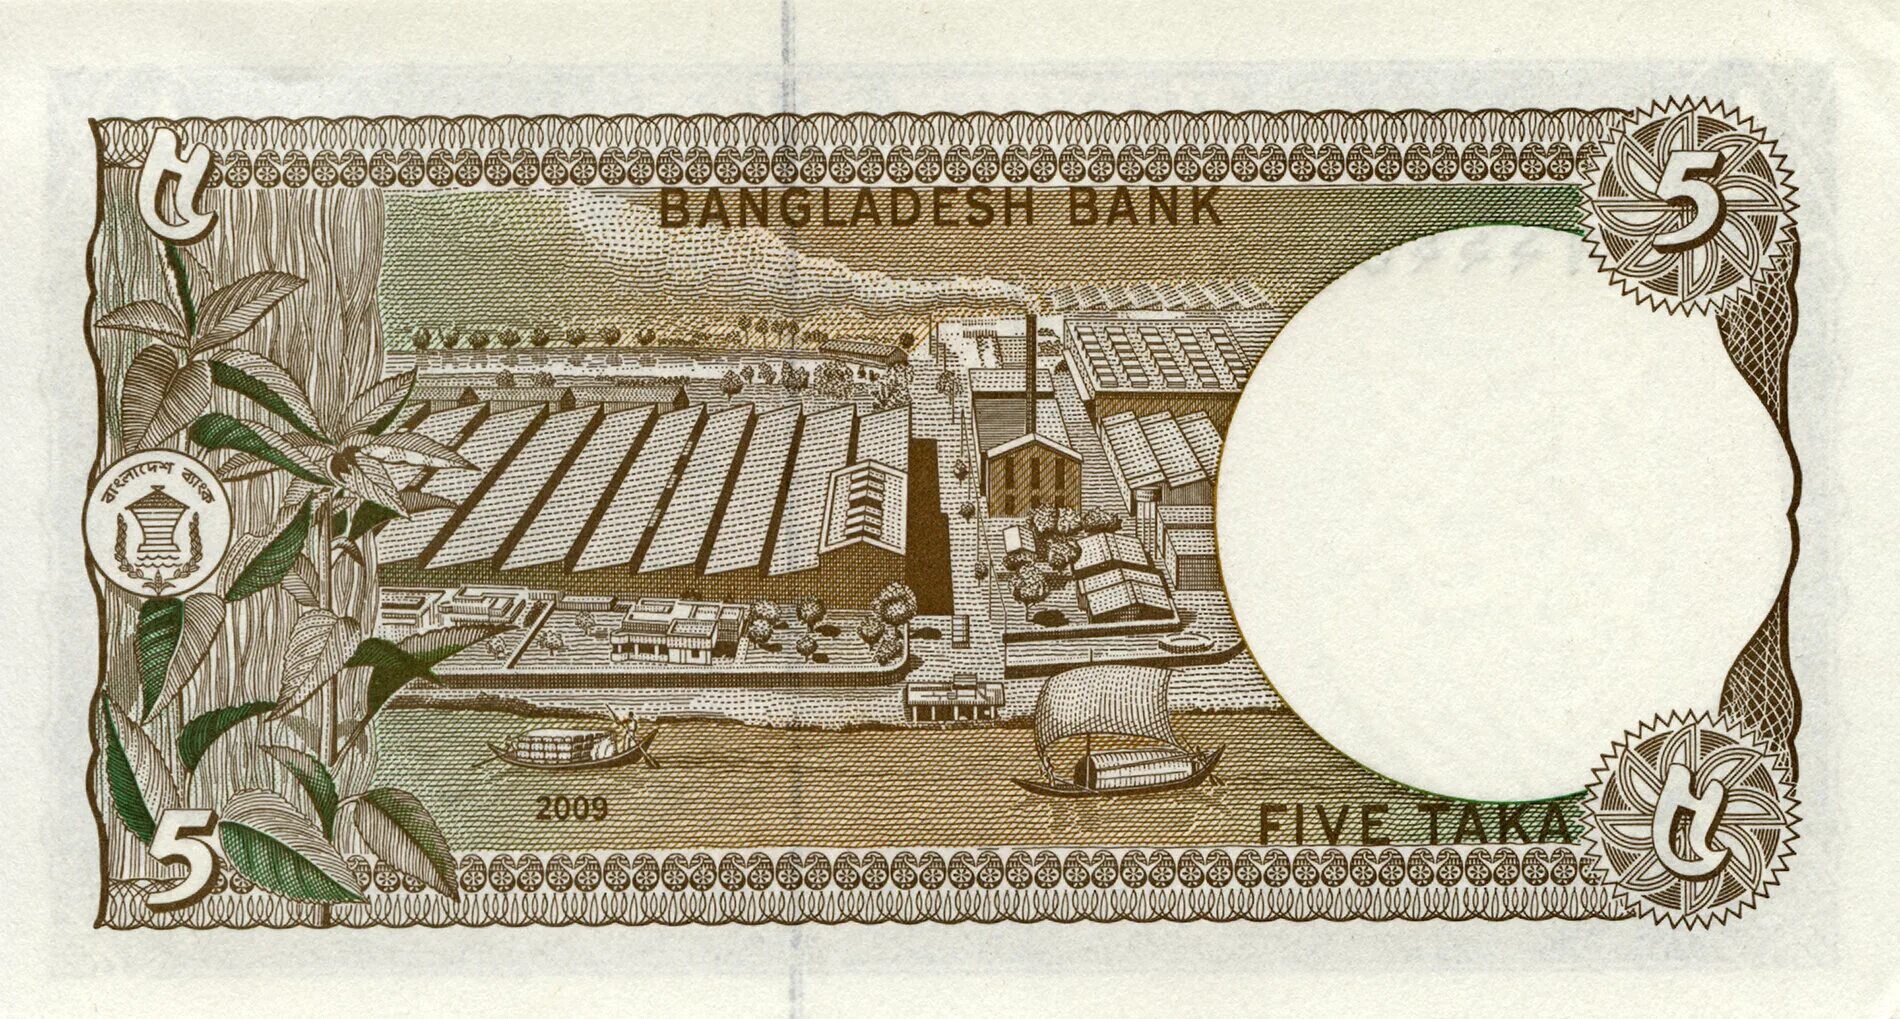 Таку 5. 5 Така Бангладеш. 5 Така Бангладеш банкнота 2009. Банкноты Бангладеш 2 така. Текстура банкноты.